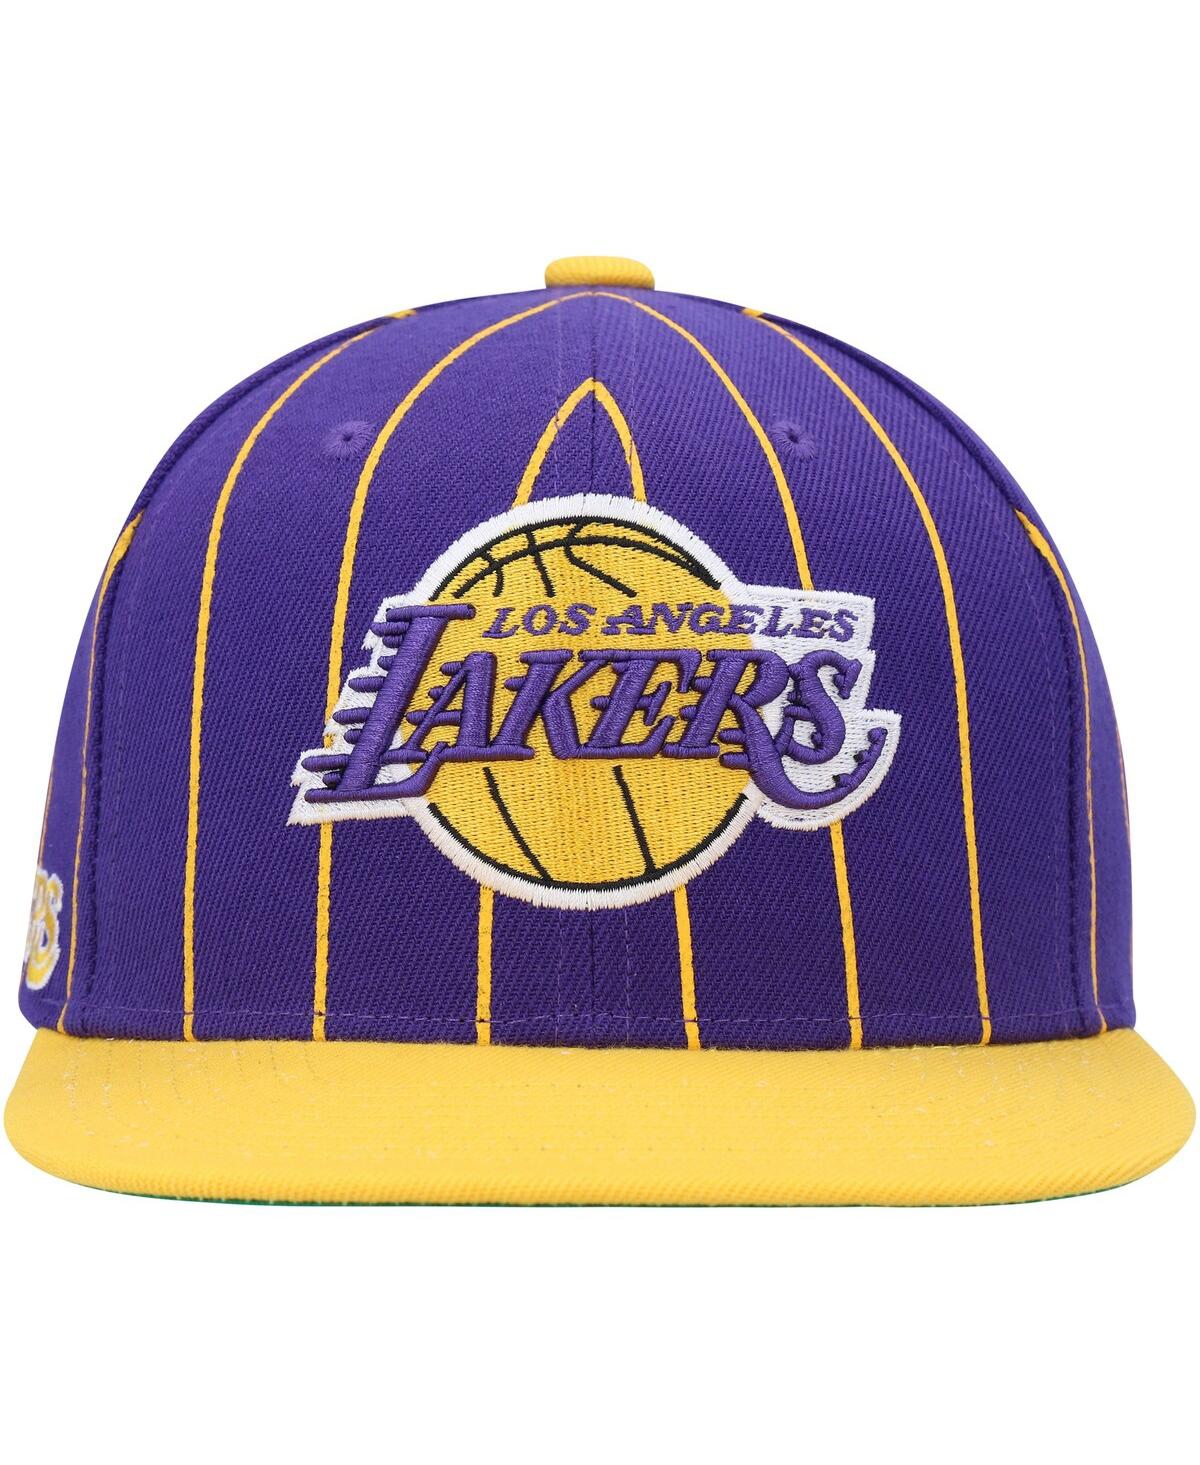 Shop Mitchell & Ness Men's  Purple, Gold Los Angeles Lakers Hardwood Classics Pinstripe Snapback Hat